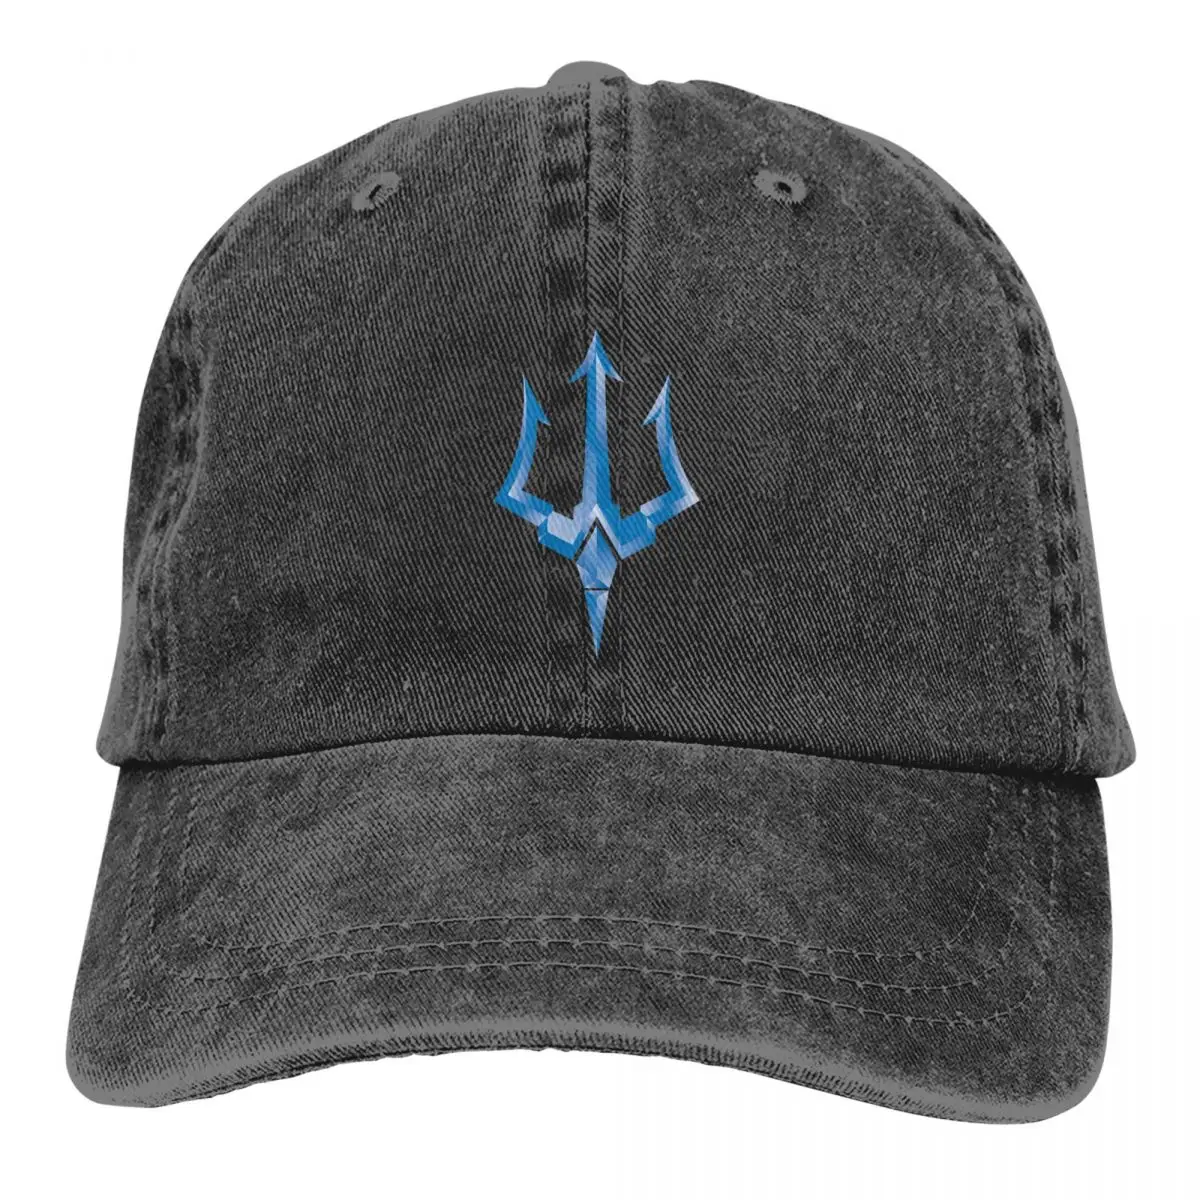 Summer Cap Sun Visor Blue Poseidon Trident Hip Hop Caps Poseidon's Weapon Cowboy Hat Peaked Hats